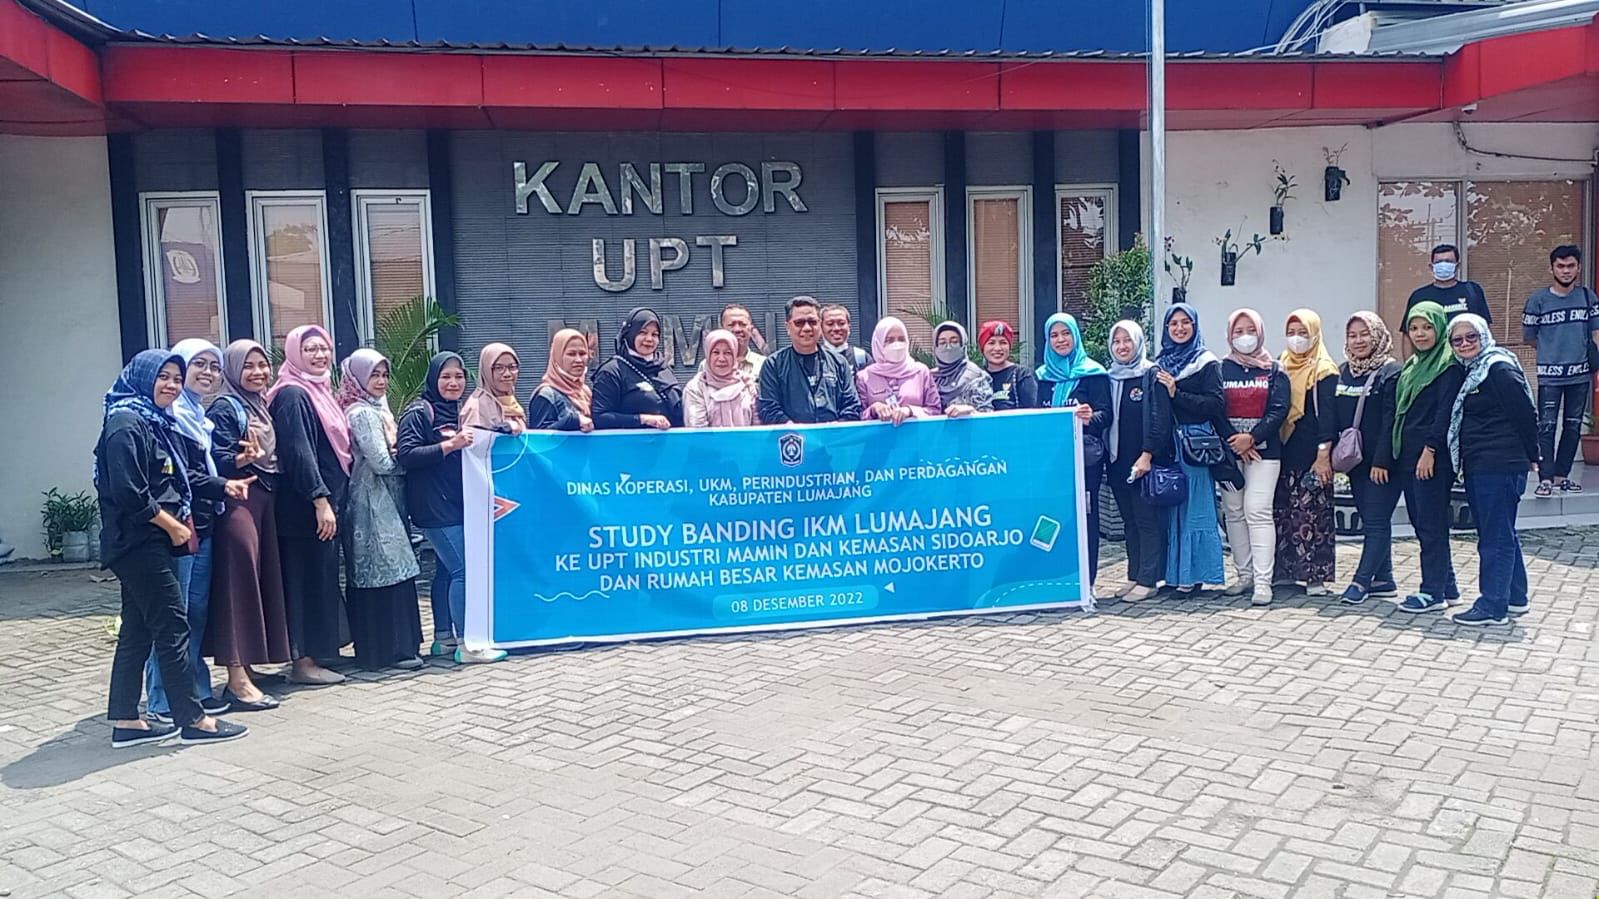 Study Banding UMKM Kabupaten Lumajang ke UPT Industri Mamin dan Kemasan Sidoarjo dan Rumah Besar Kemasan Mojokerto